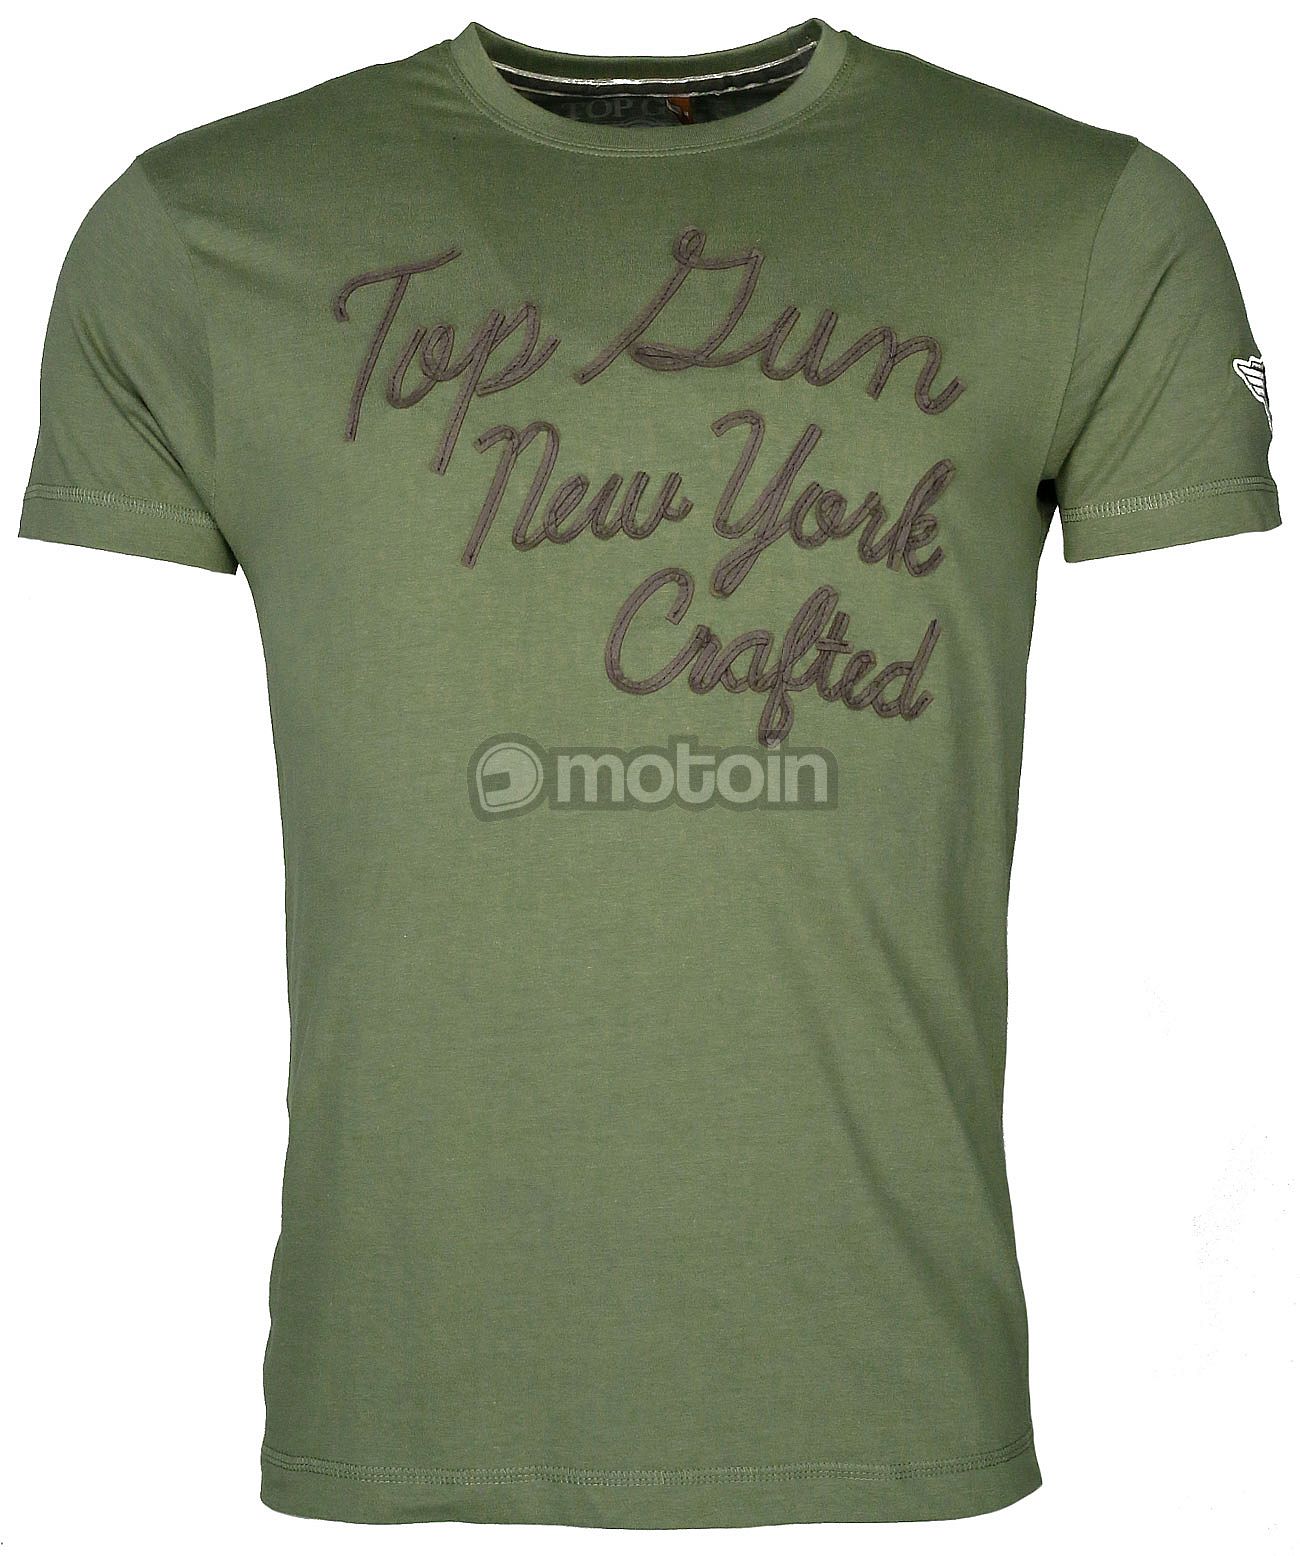 Top Gun New York, camiseta